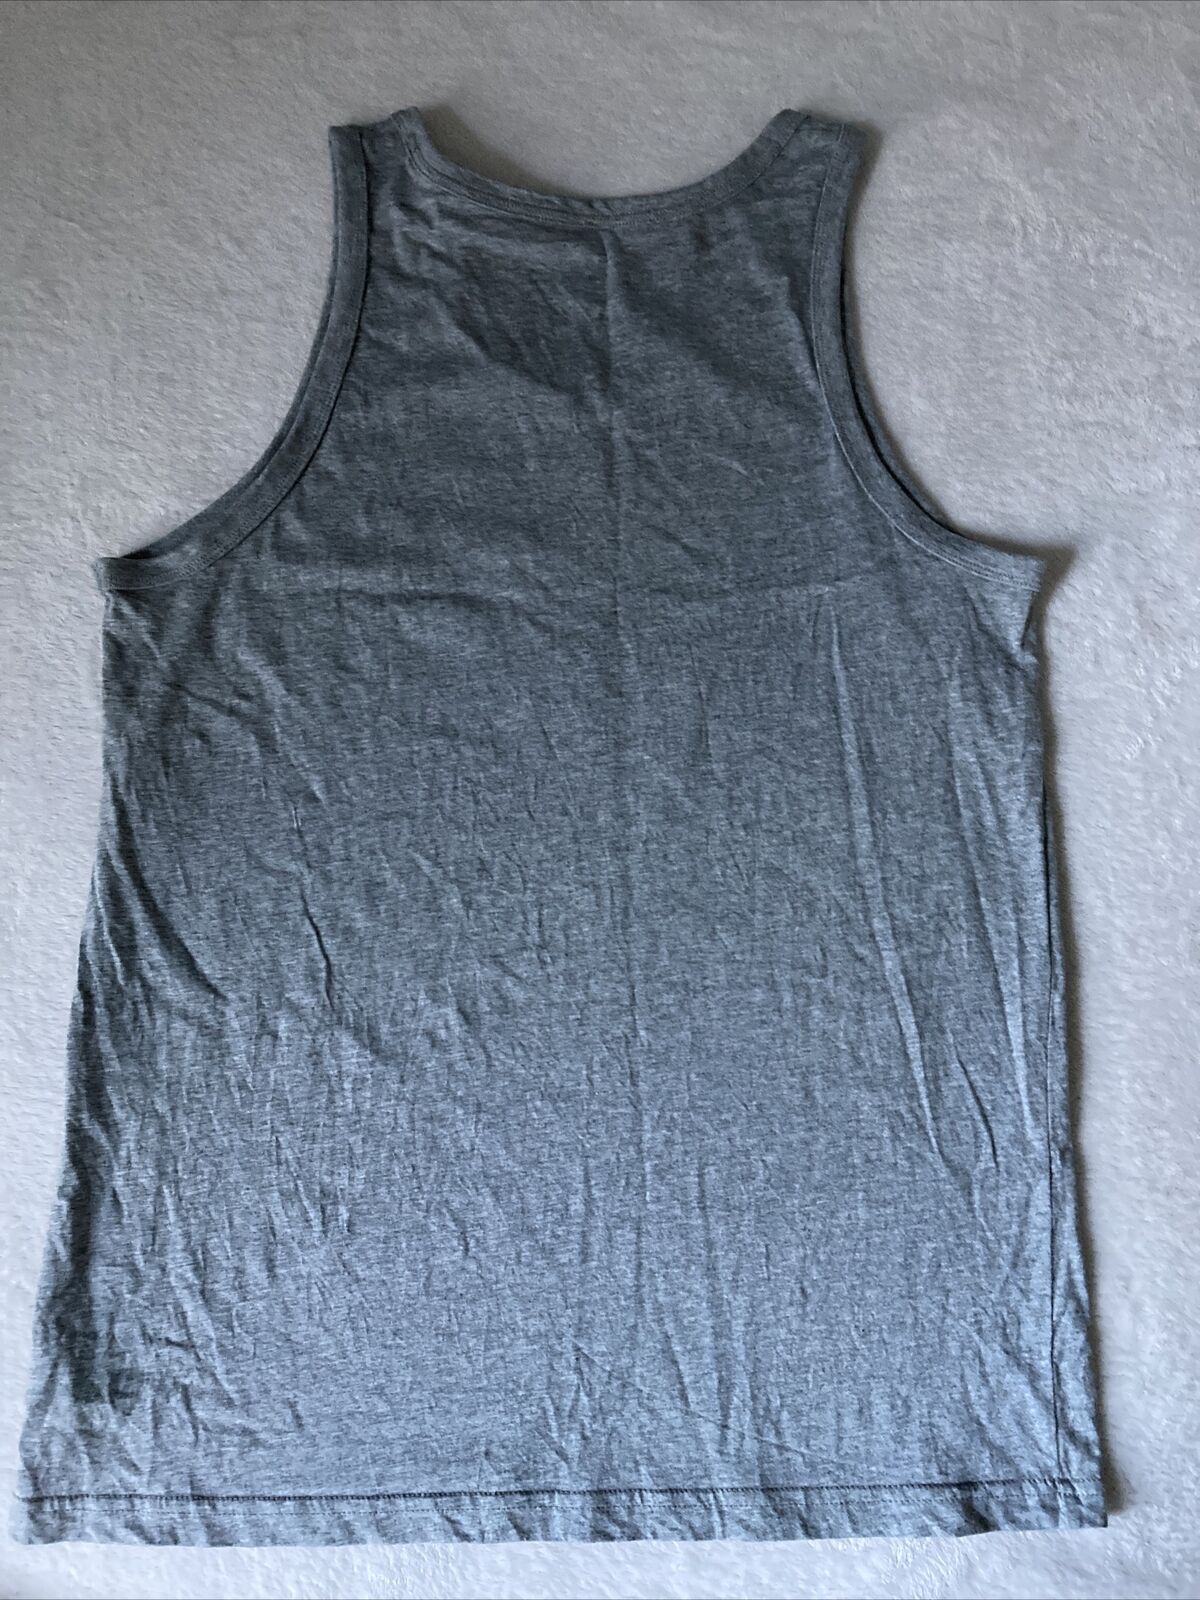 CONVERSE ALL STAR Grey T-Shirt Best. Size M | eBay